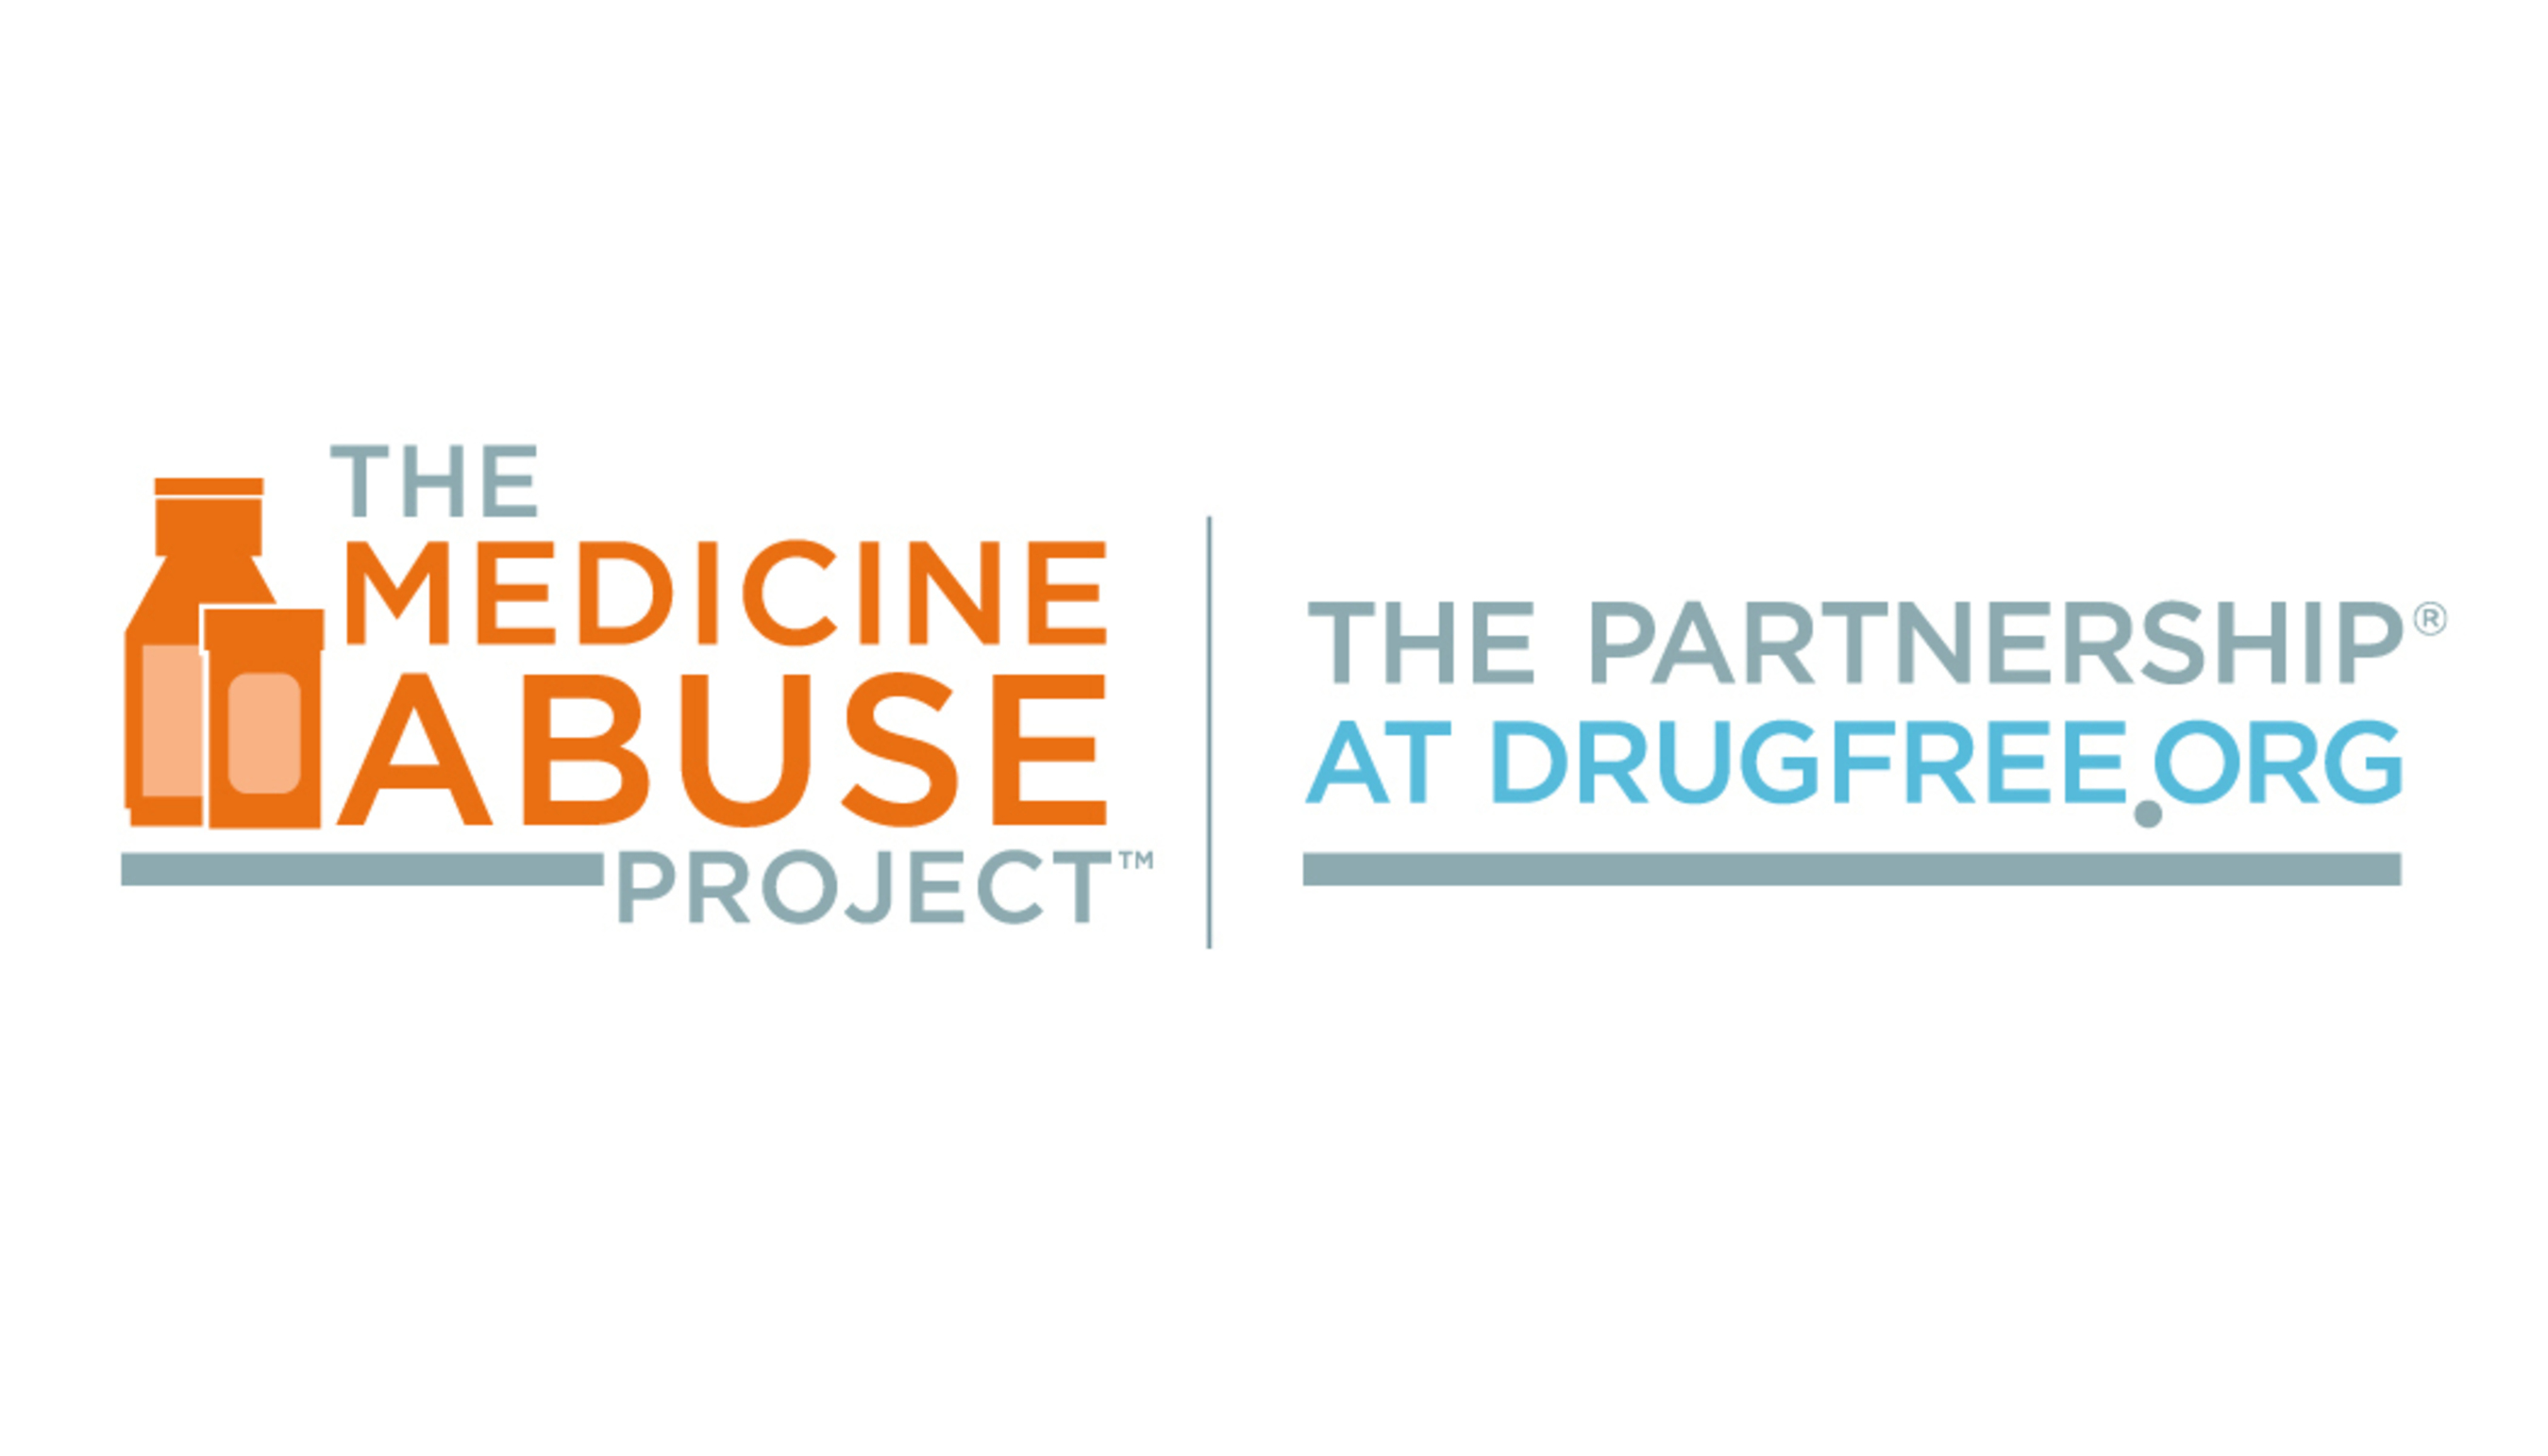 The Partnership at Drugfree.org (PRNewsFoto/CVS/pharmacy)